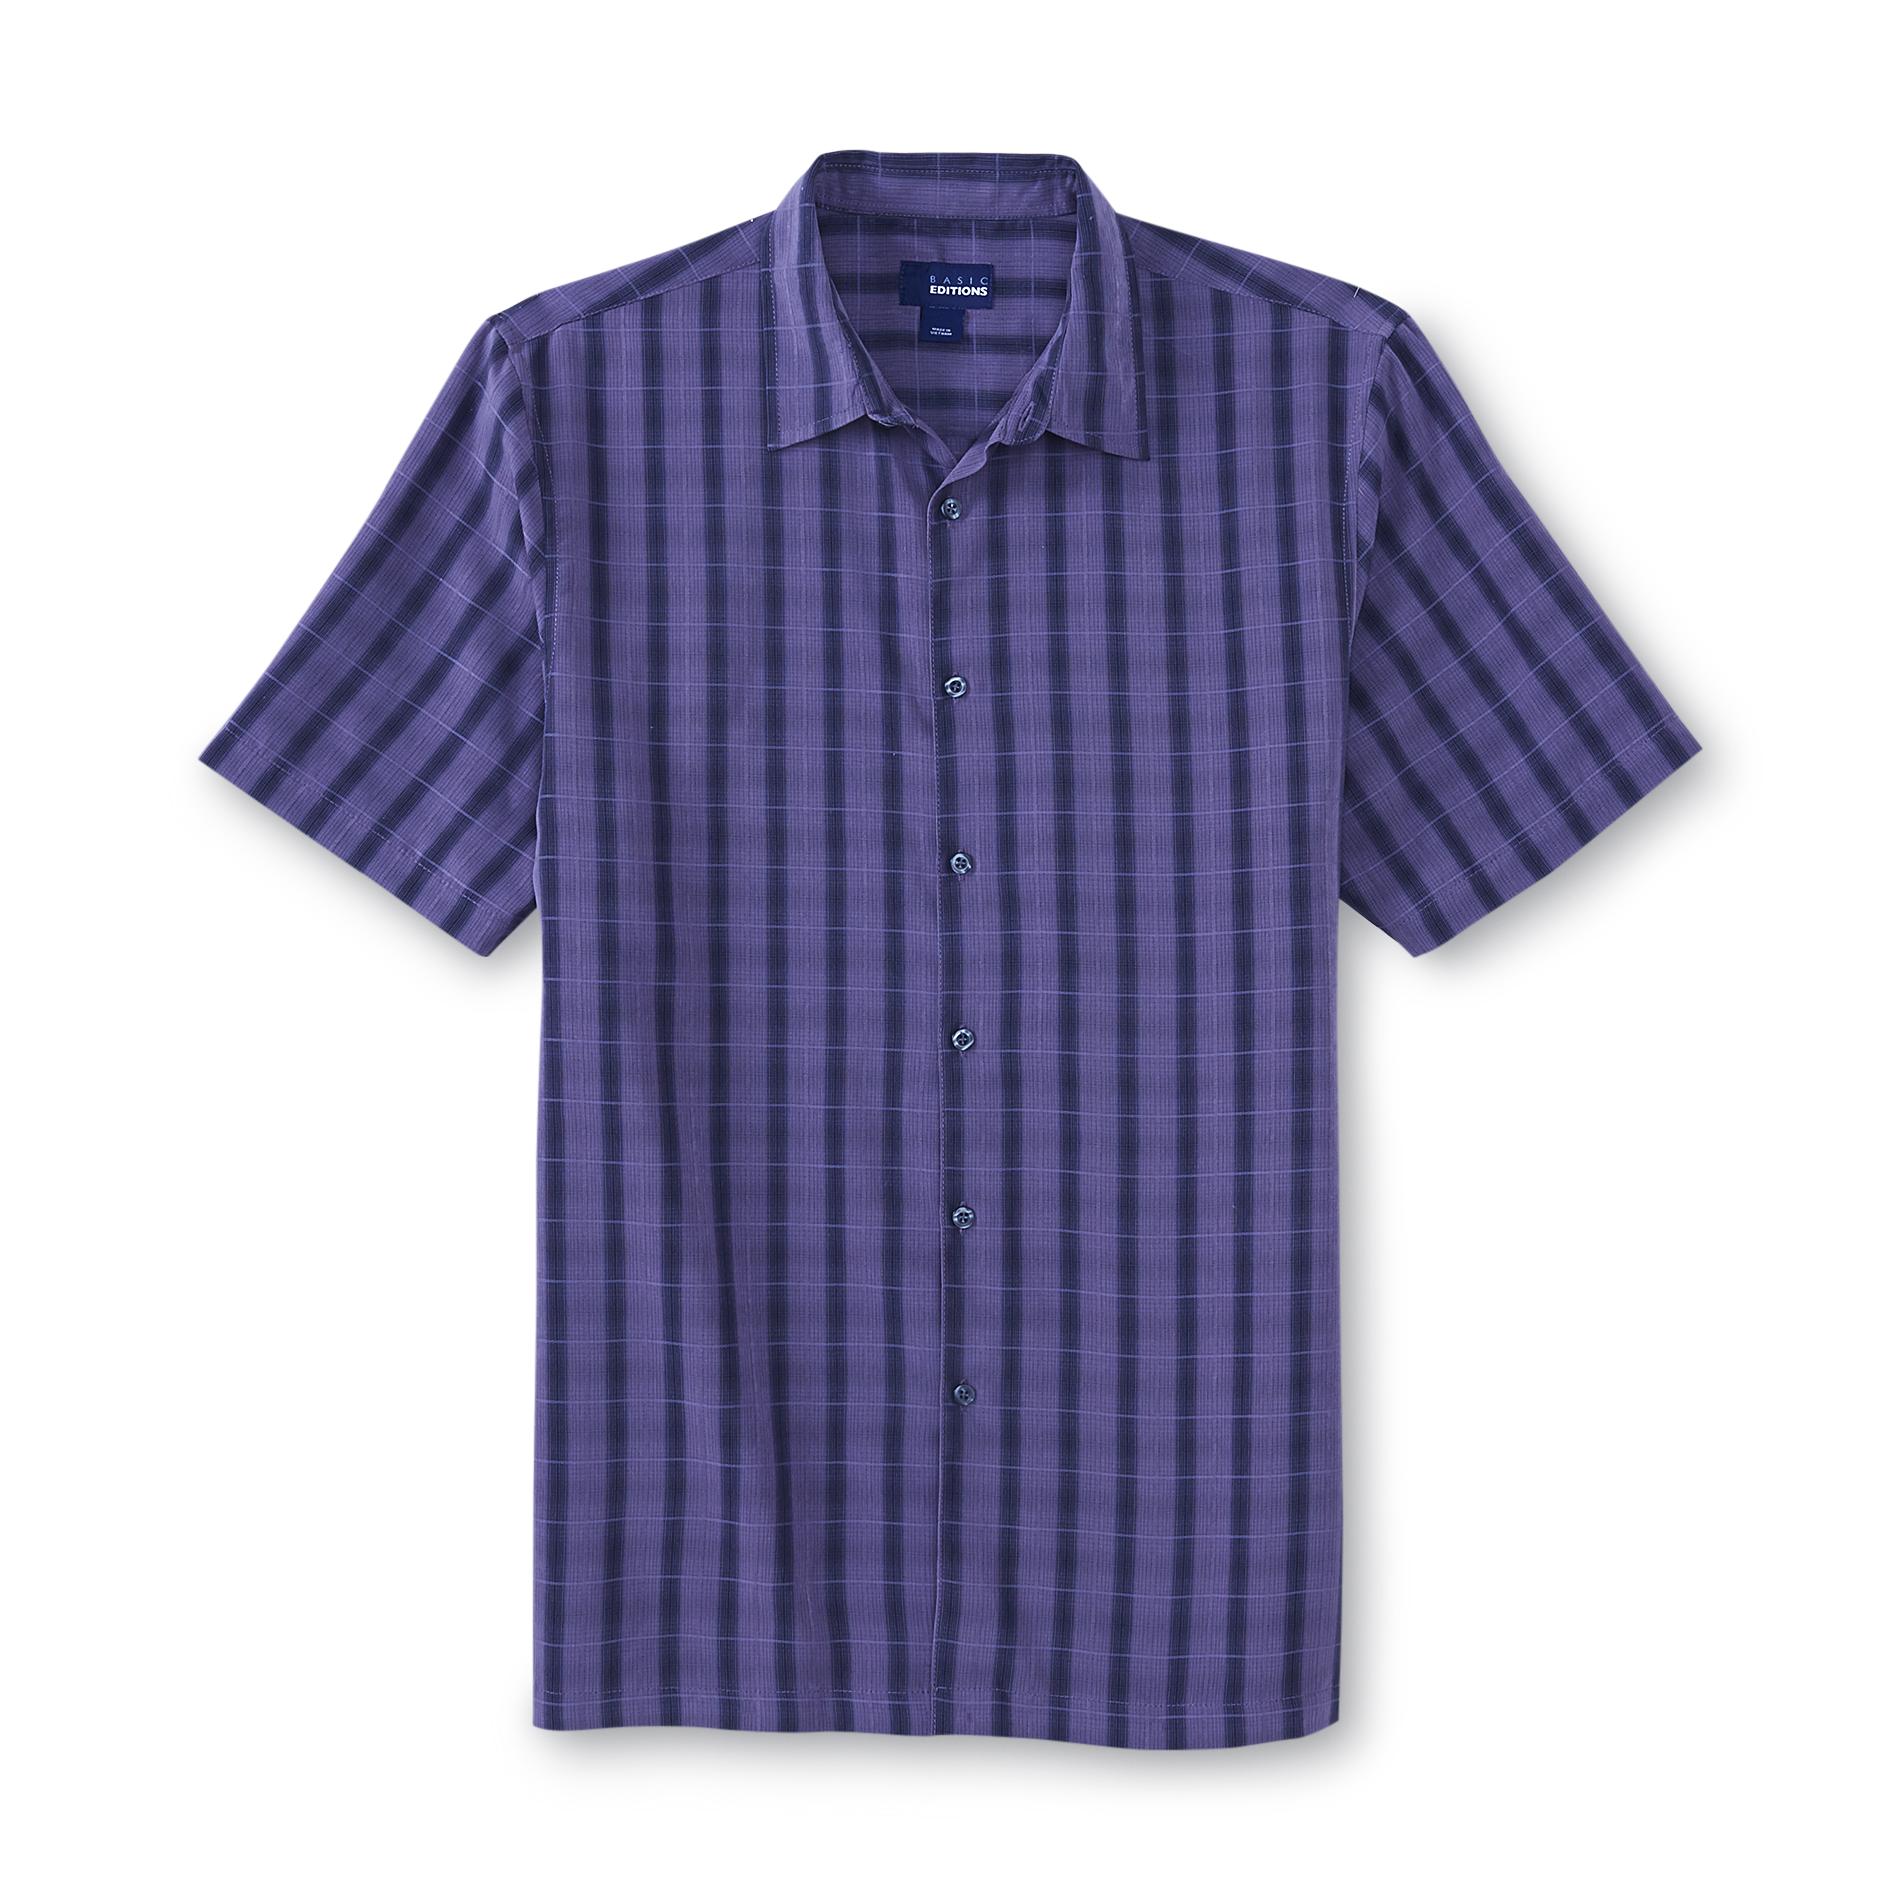 Basic Editions Men's Big & Tall Short-Sleeve Microfiber Shirt - Plaid